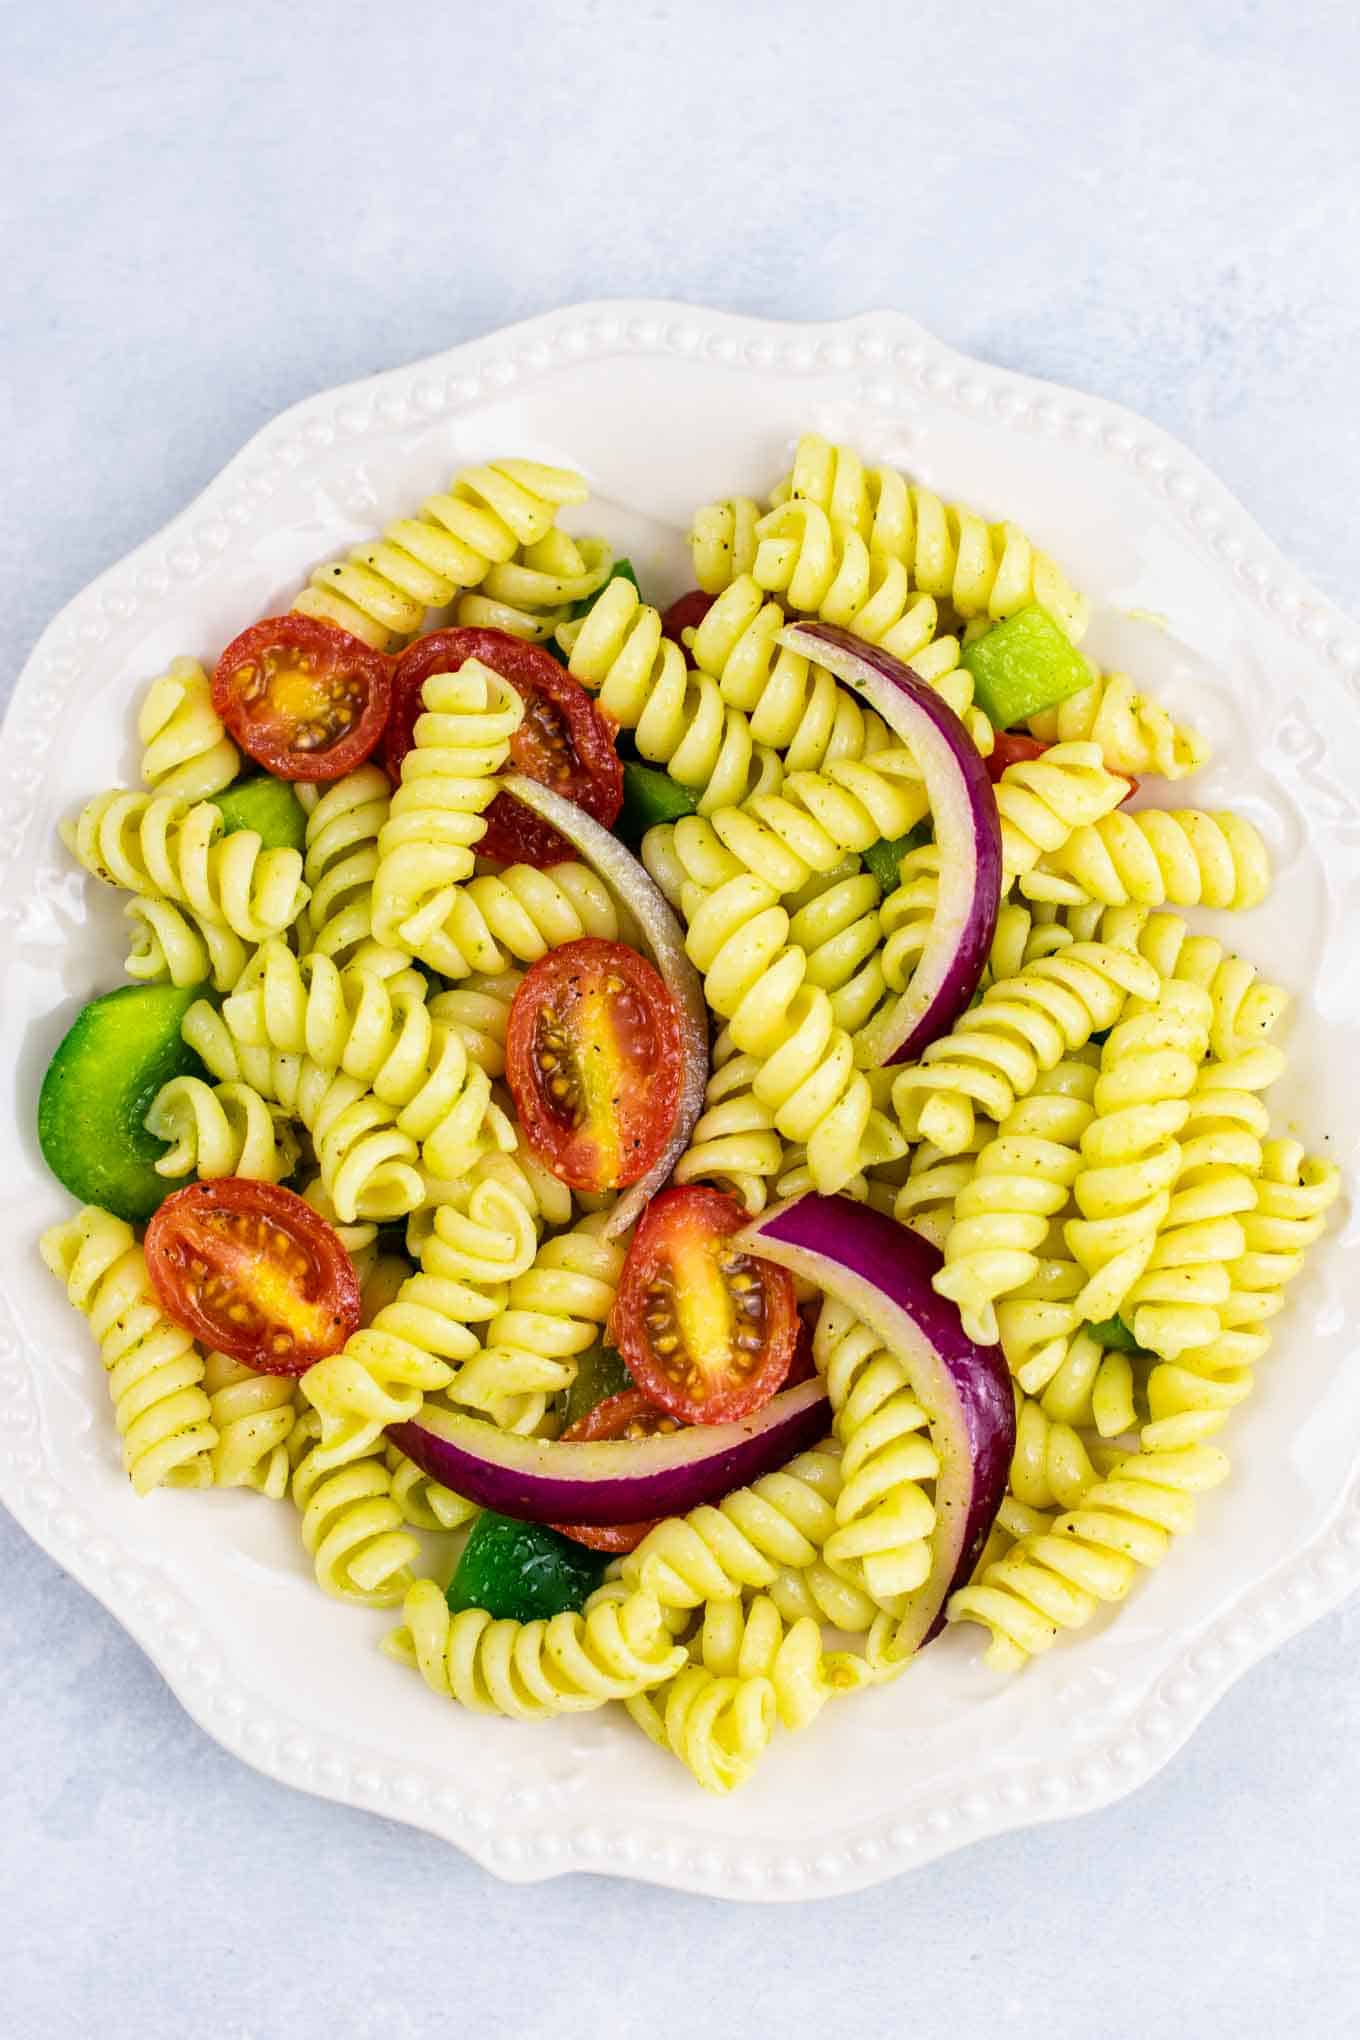 Vegan cold pasta salad recipe – this was AMAZING! So much flavor and really easy to make. #vegan #pastasalad #vegetarian #sidedish #summer #meatless #dairyfree #healthyrecipe #veganpastasalad